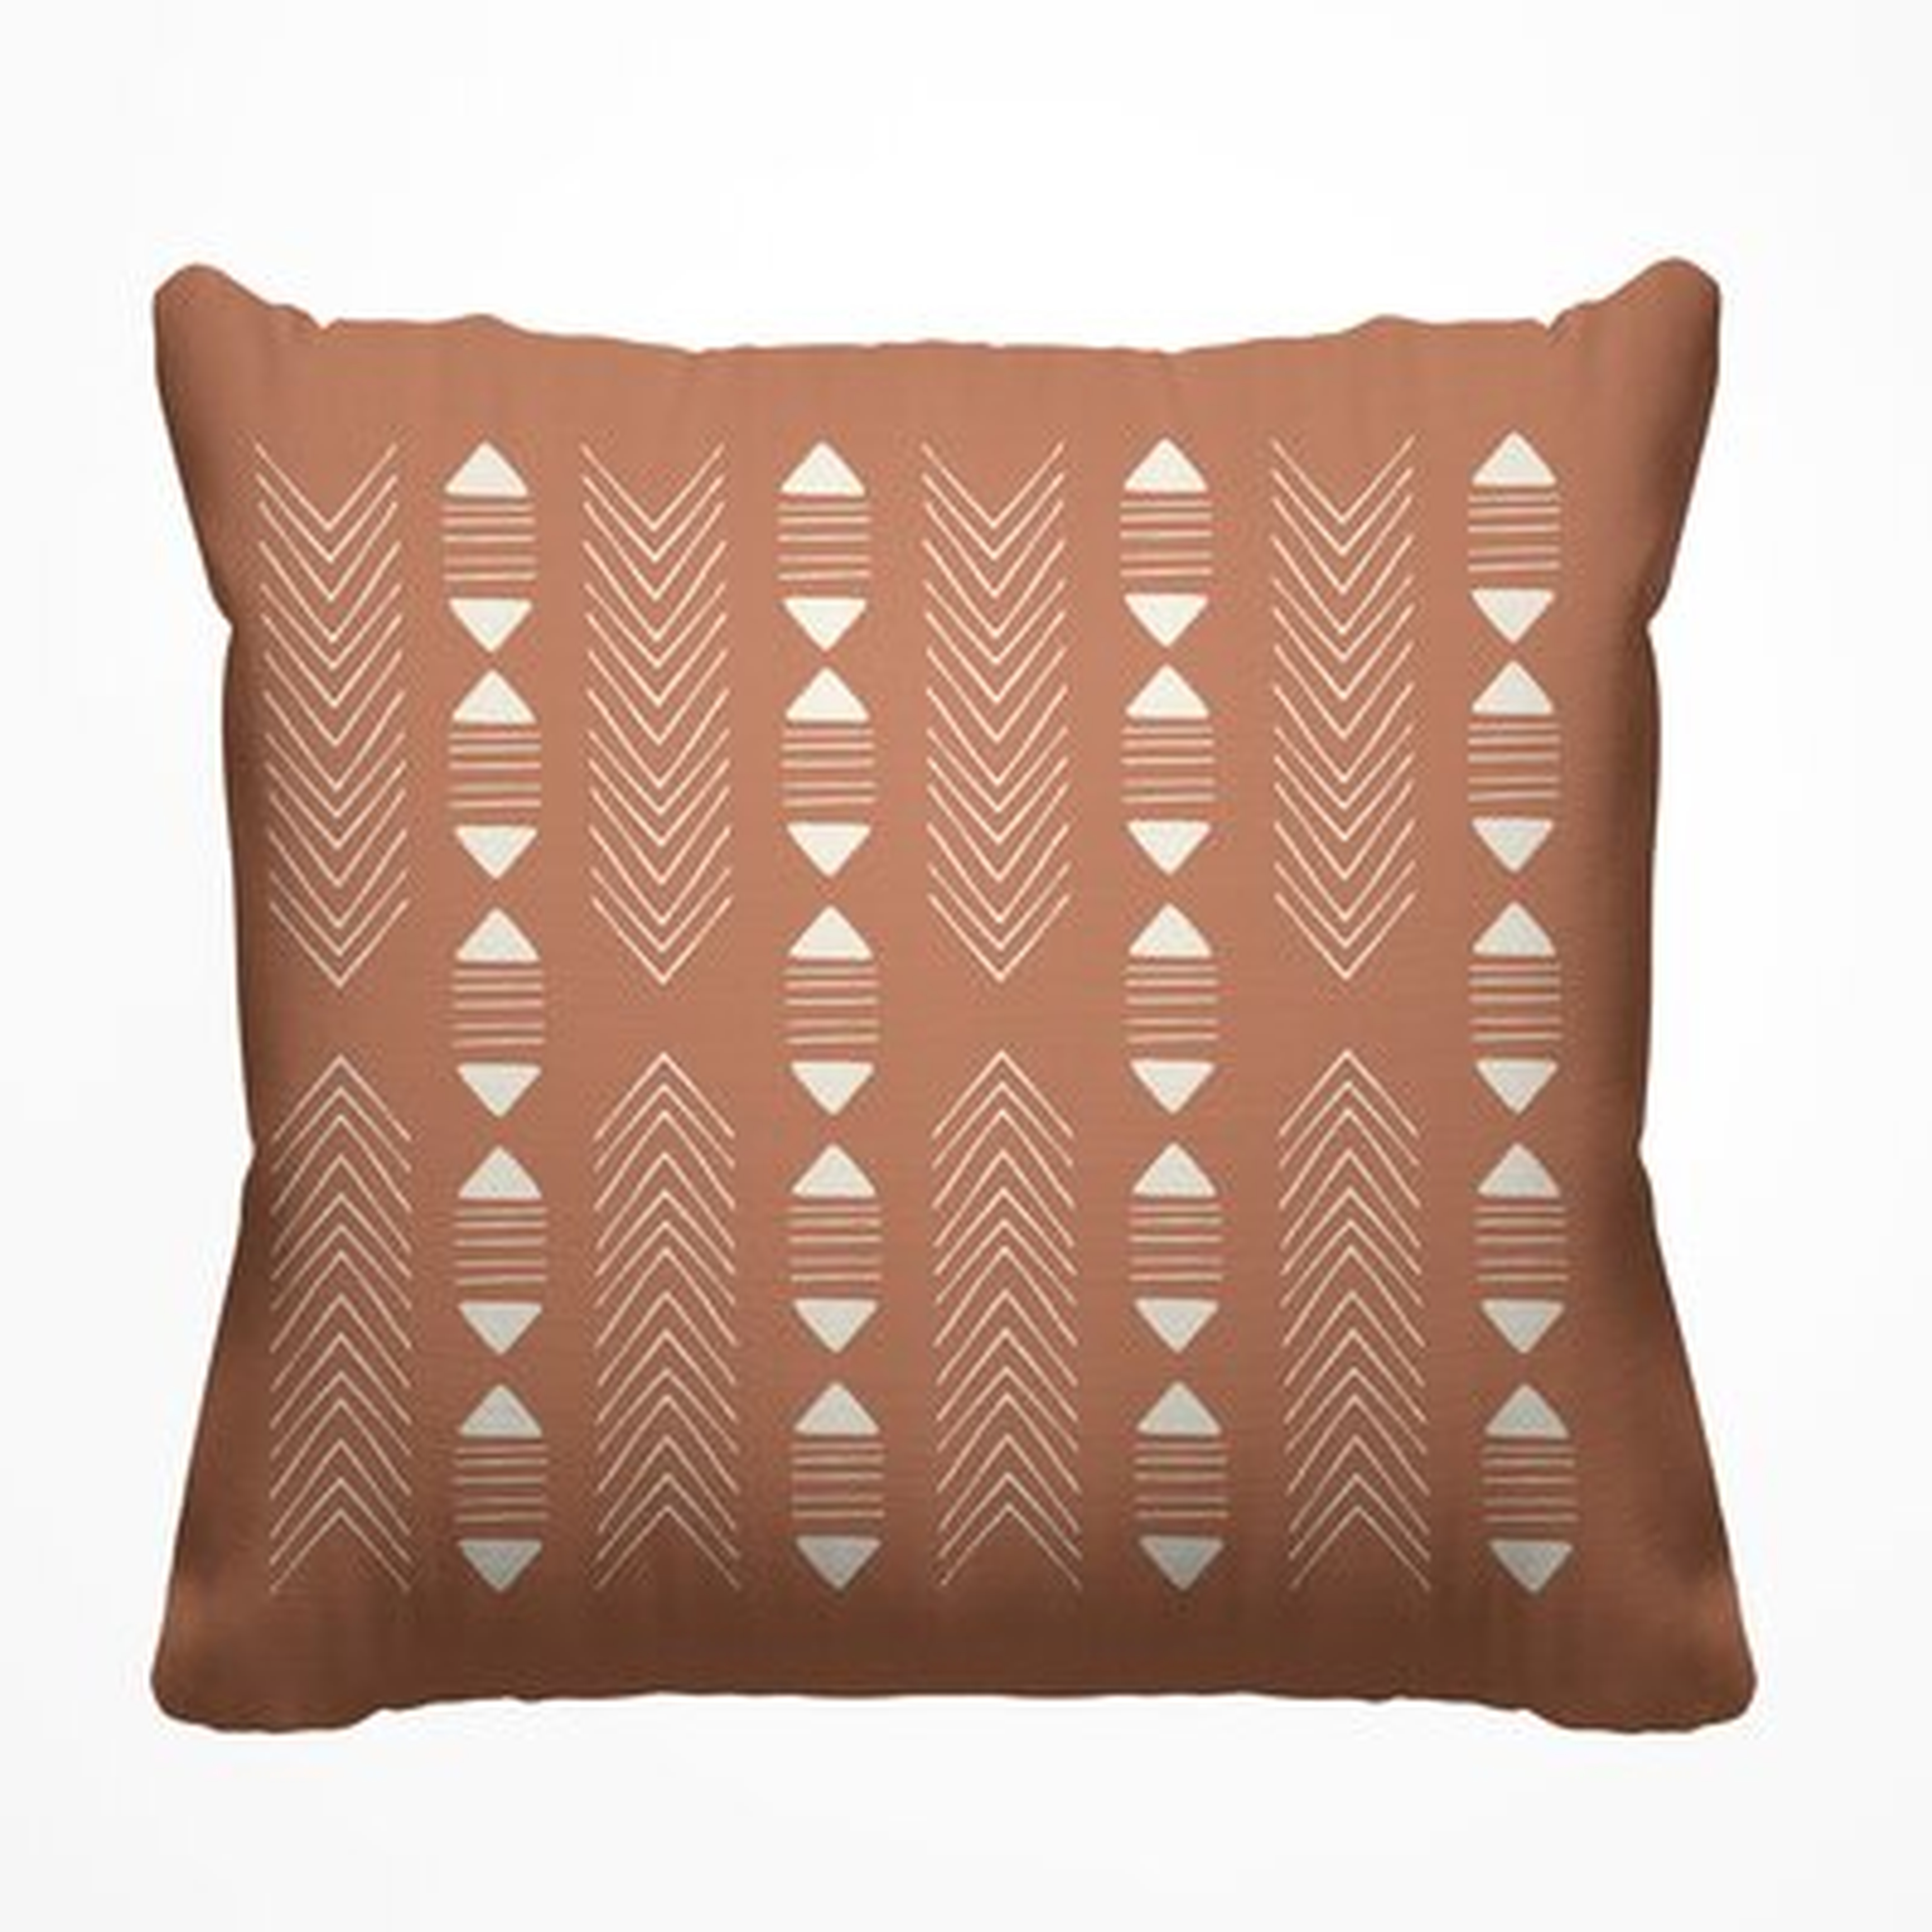 Coen Nona Tribal Outdoor Square Pillow Cover & Insert - Wayfair